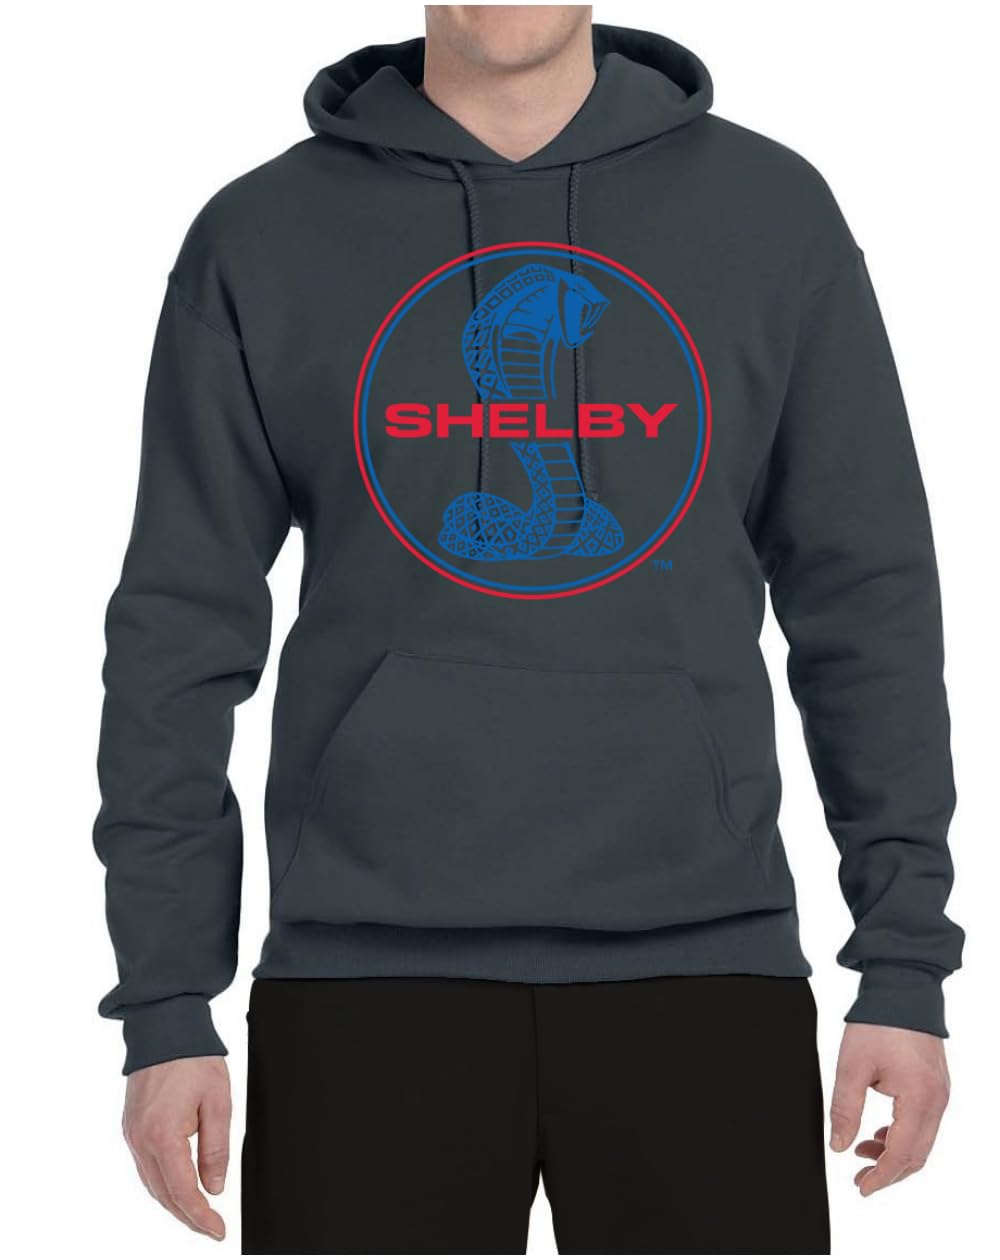 Wild Bobby Shelby Cobra USA Logo Emblem Cars and Trucks Unisex Hoodie Sweatshirt, Charcoal, Medium